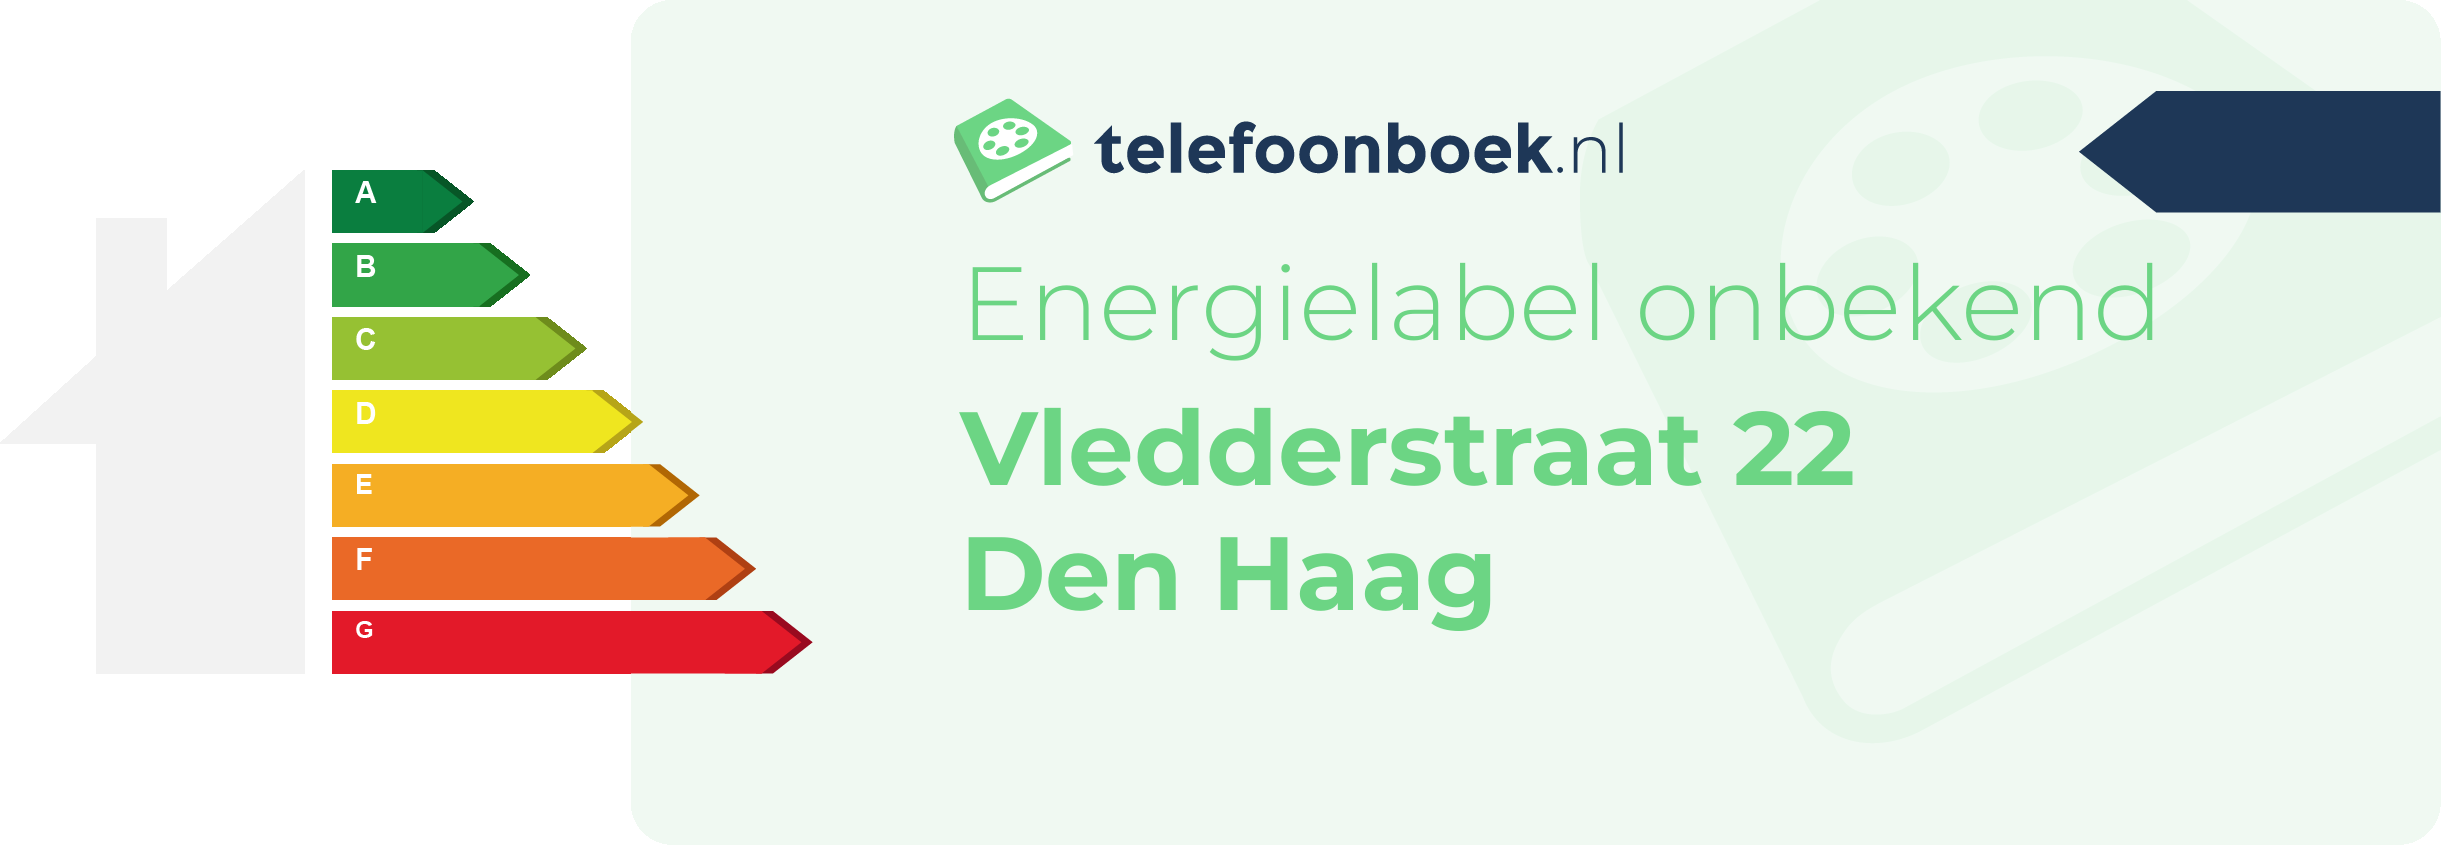 Energielabel Vledderstraat 22 Den Haag